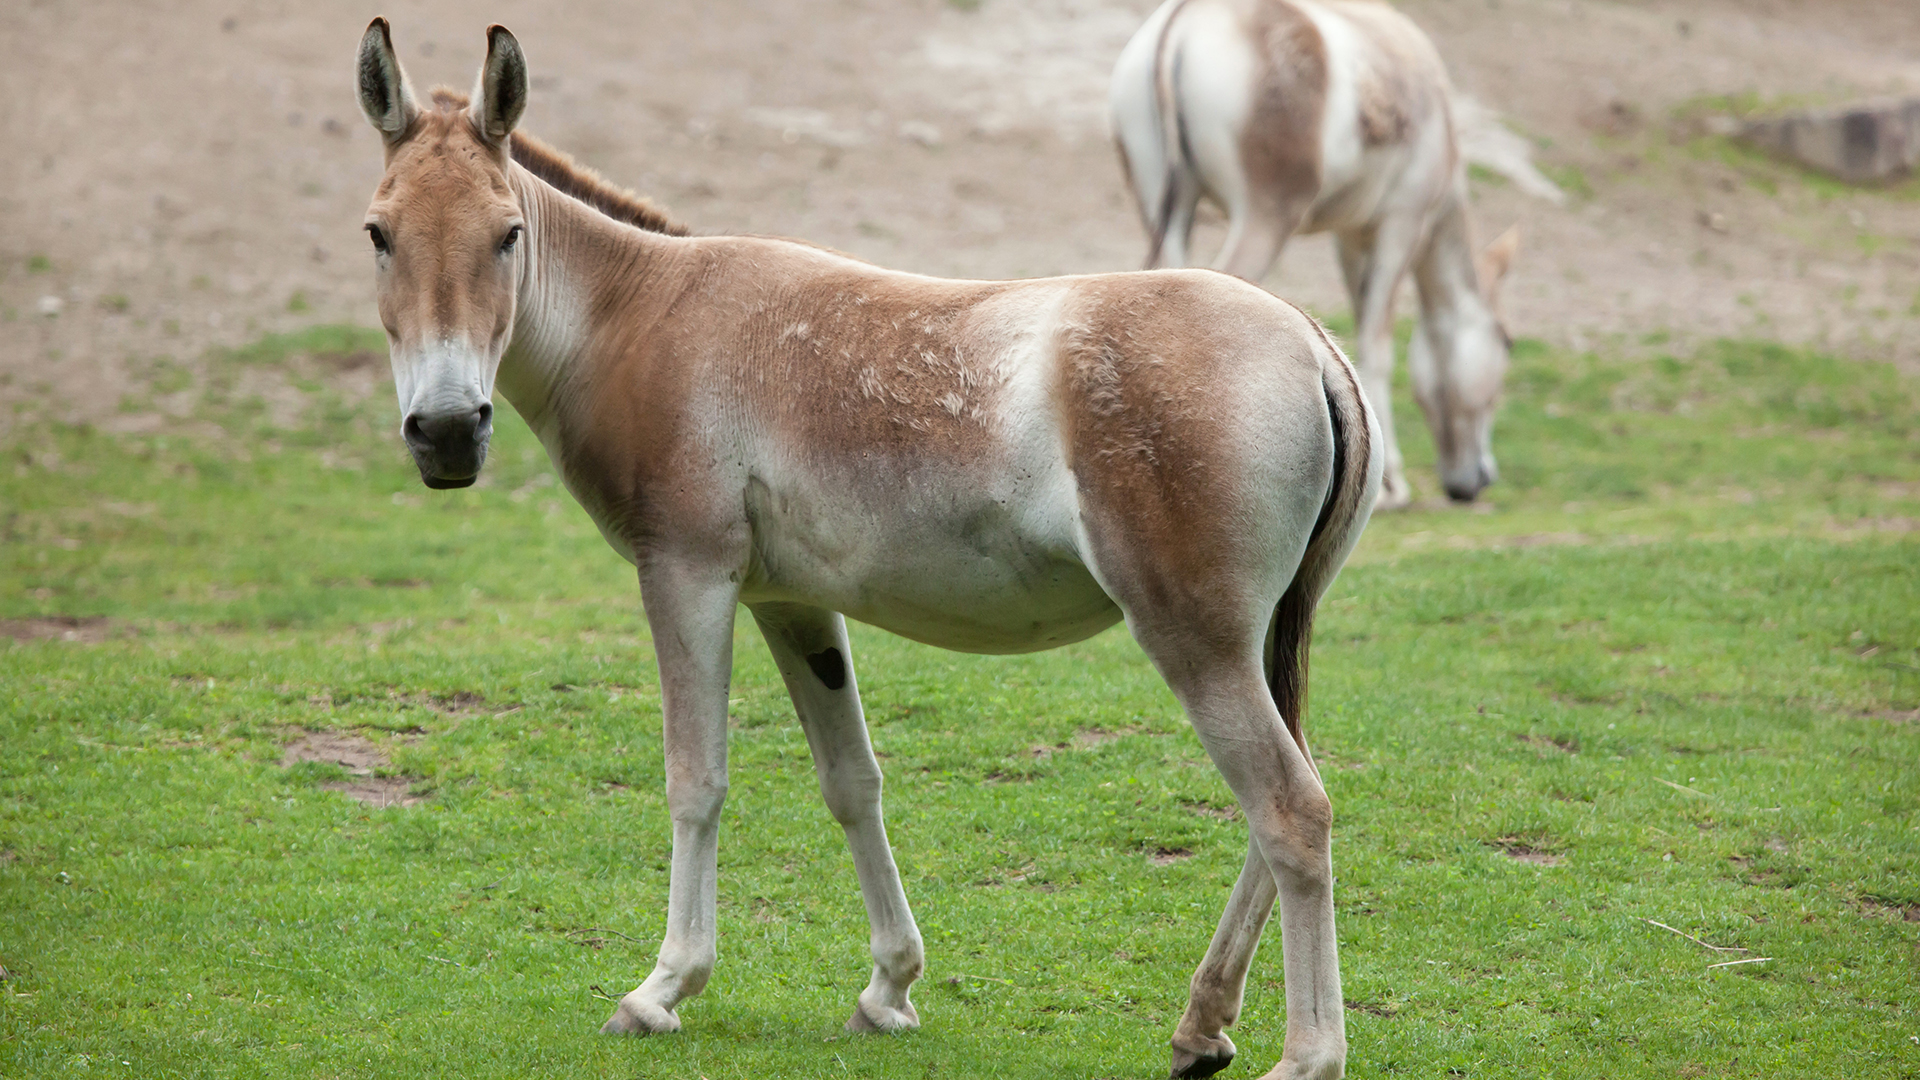 Kulans (Equus hemionus kulan) are wild donkeys that are primarily found in Turkmenistan.